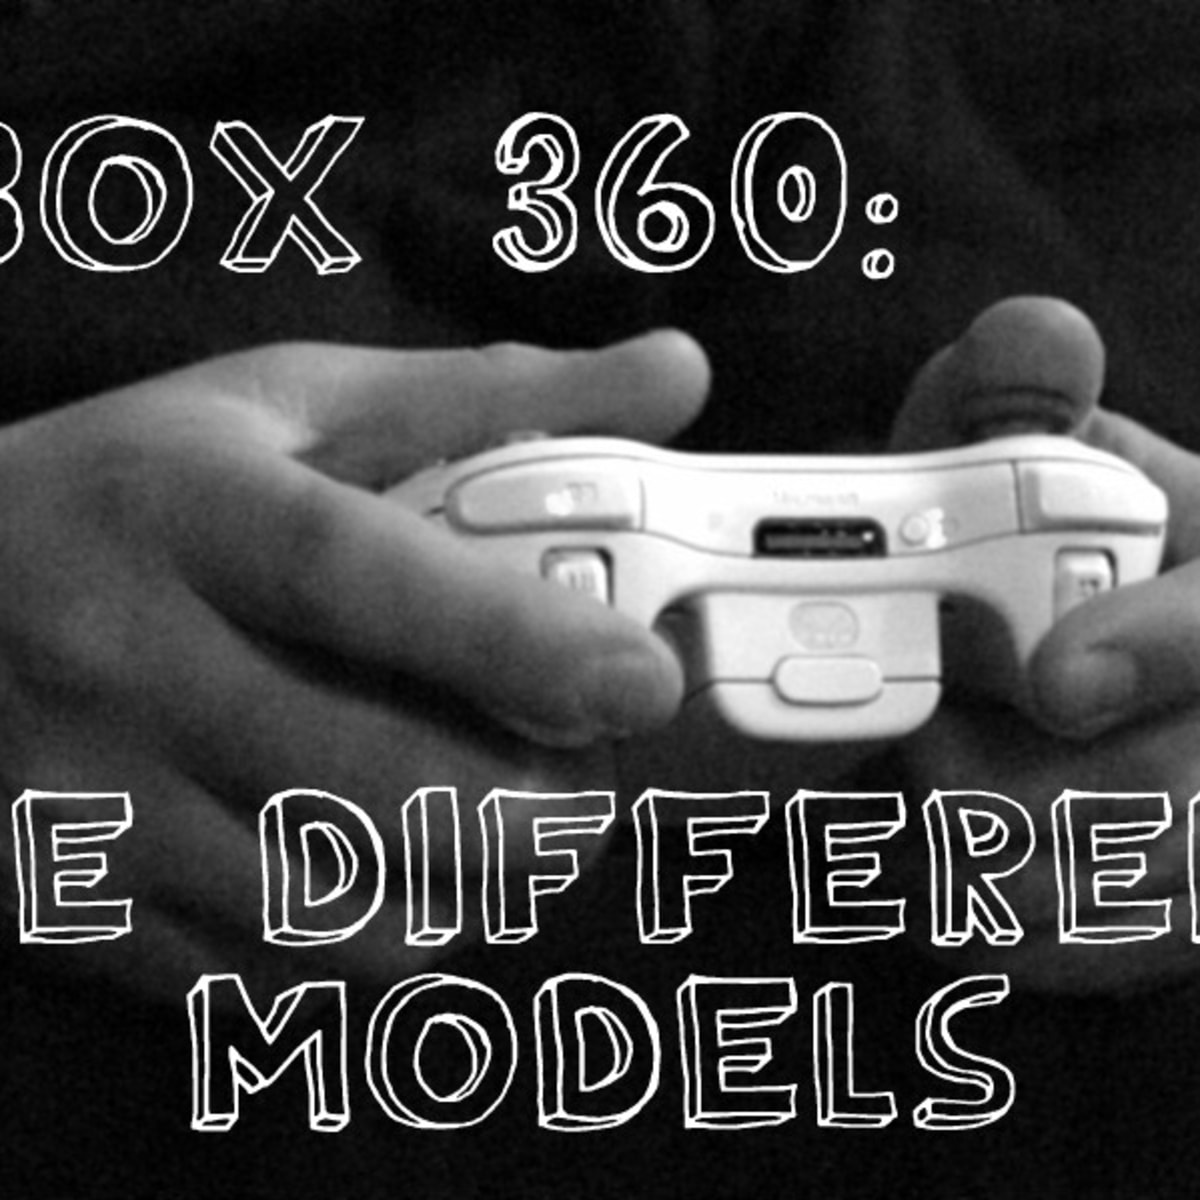 xbox e60